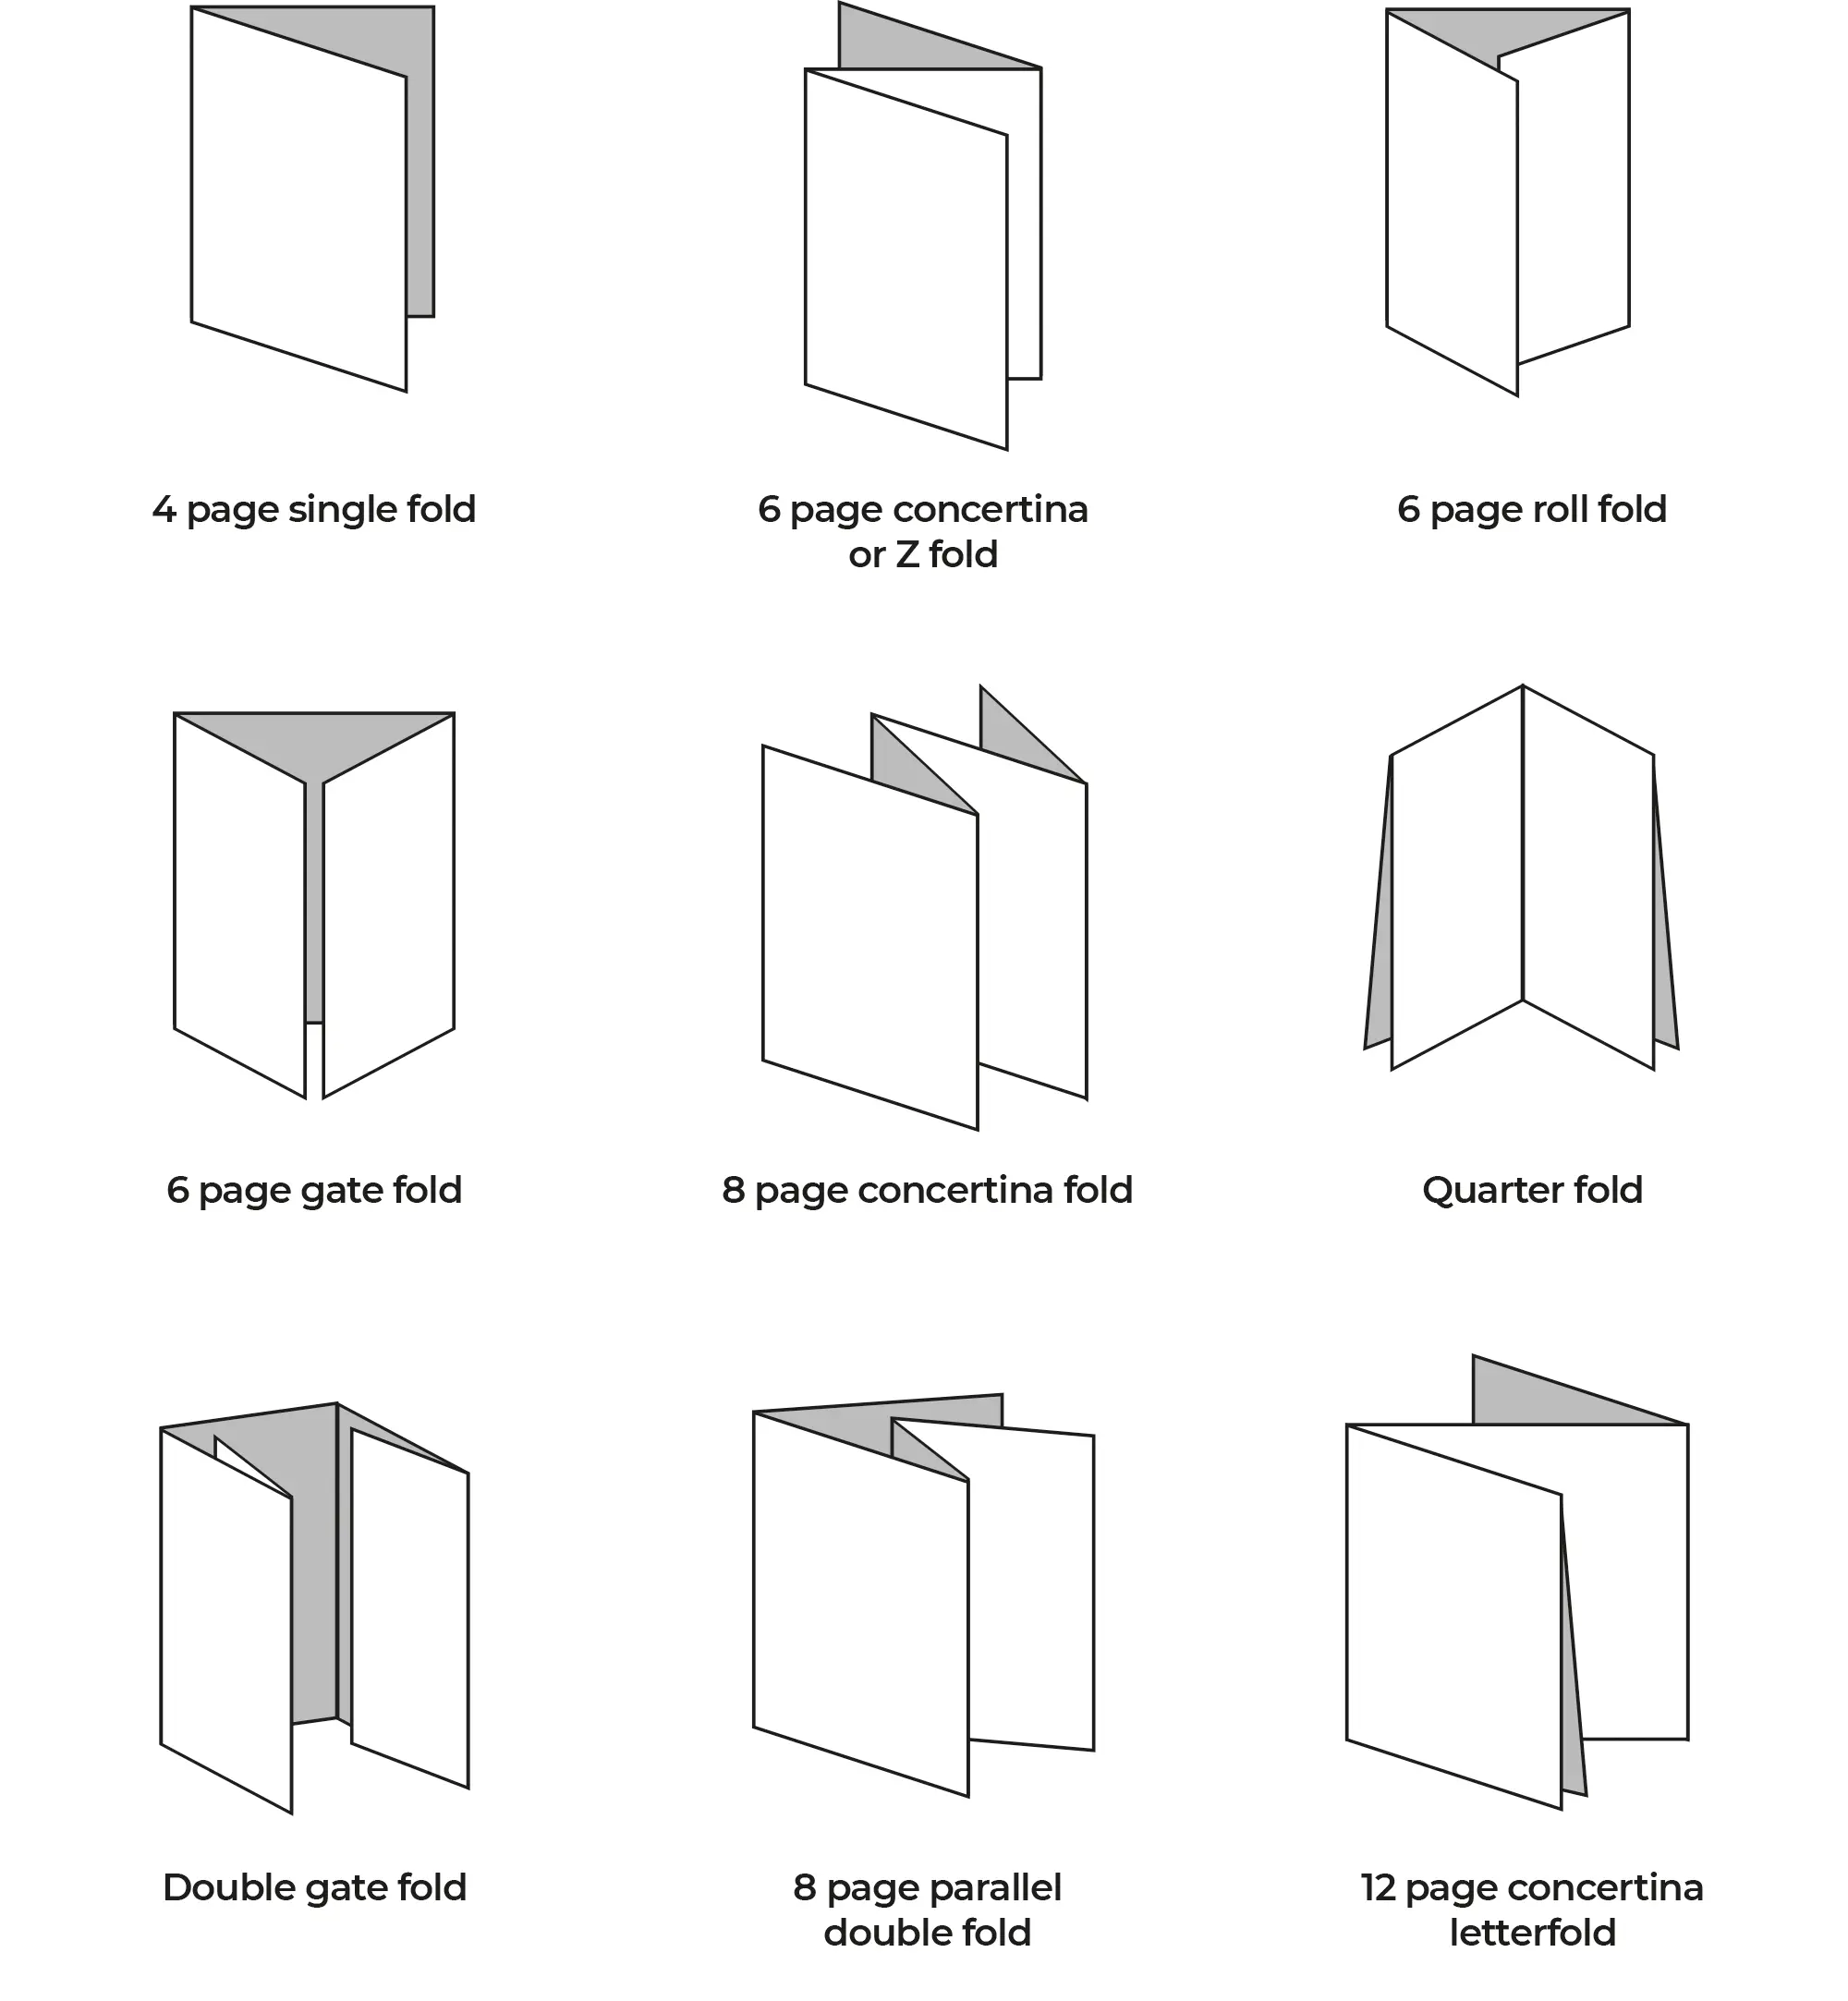 Illustration showing various folding formats